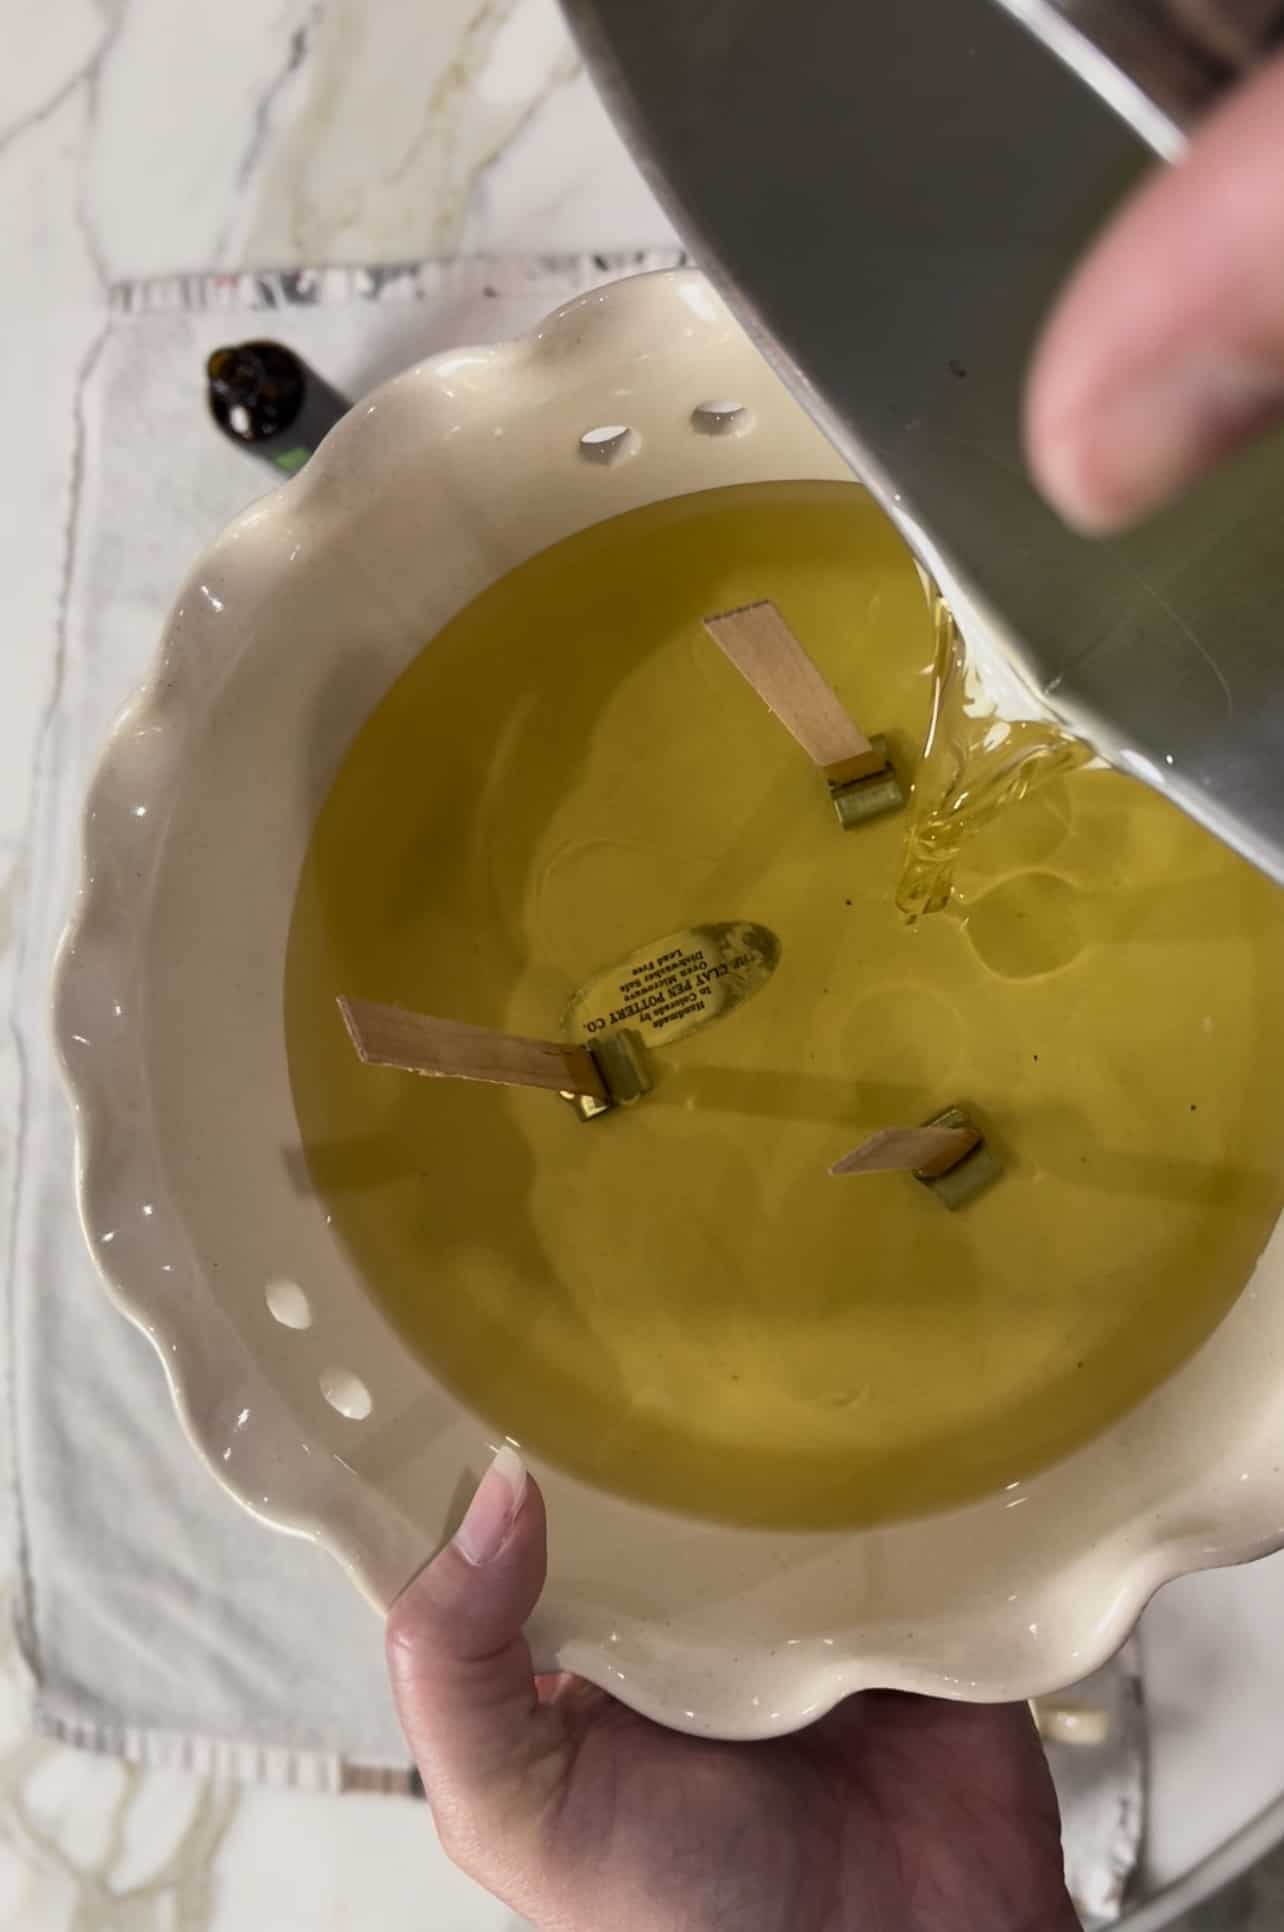 Pouring citronella scented wax into a vintage vessel